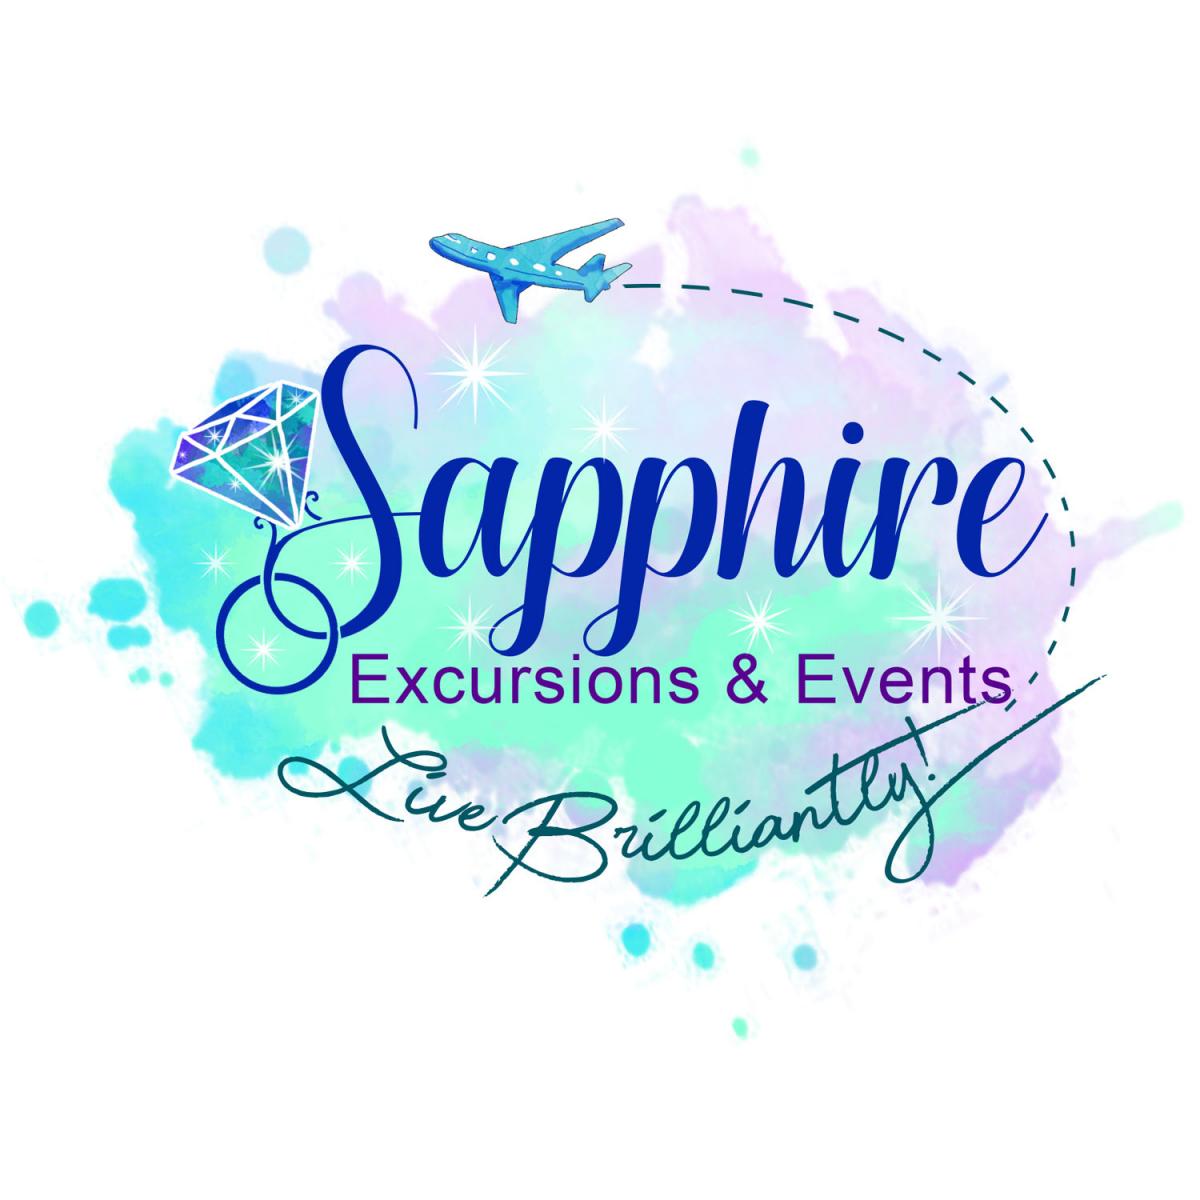 Sapphire Excursions & Events